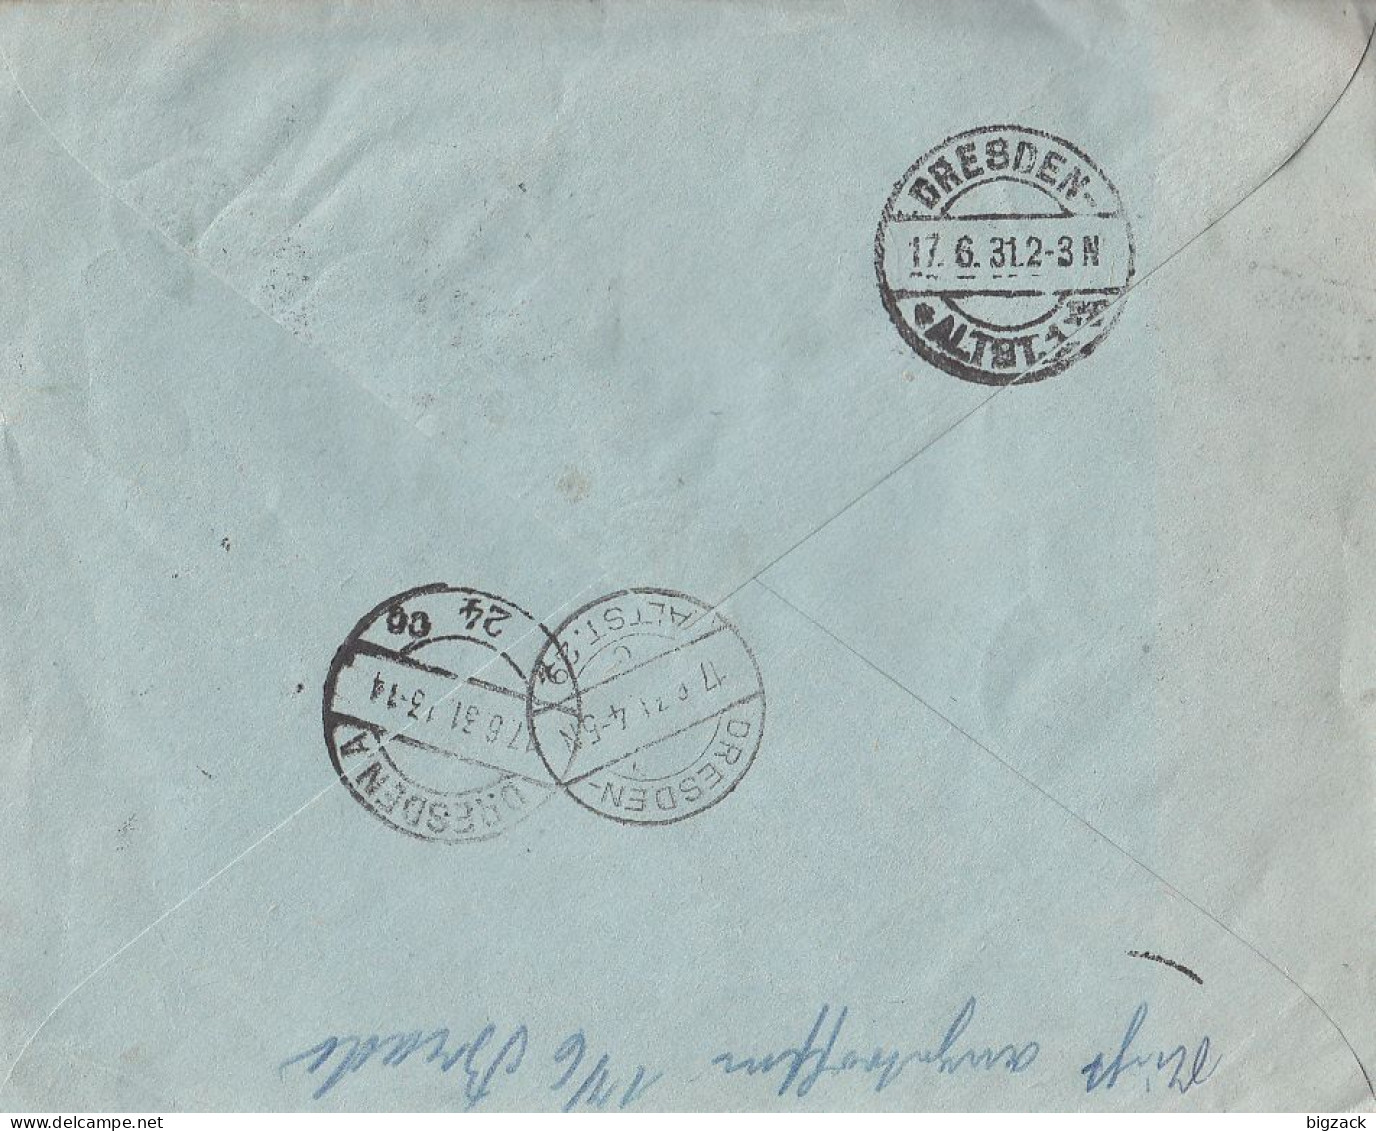 Finnland R-Brief Mif Minr.2x 167, 2x 168 Helsinki 15.4.31 Gel. Nach Dresden - Covers & Documents